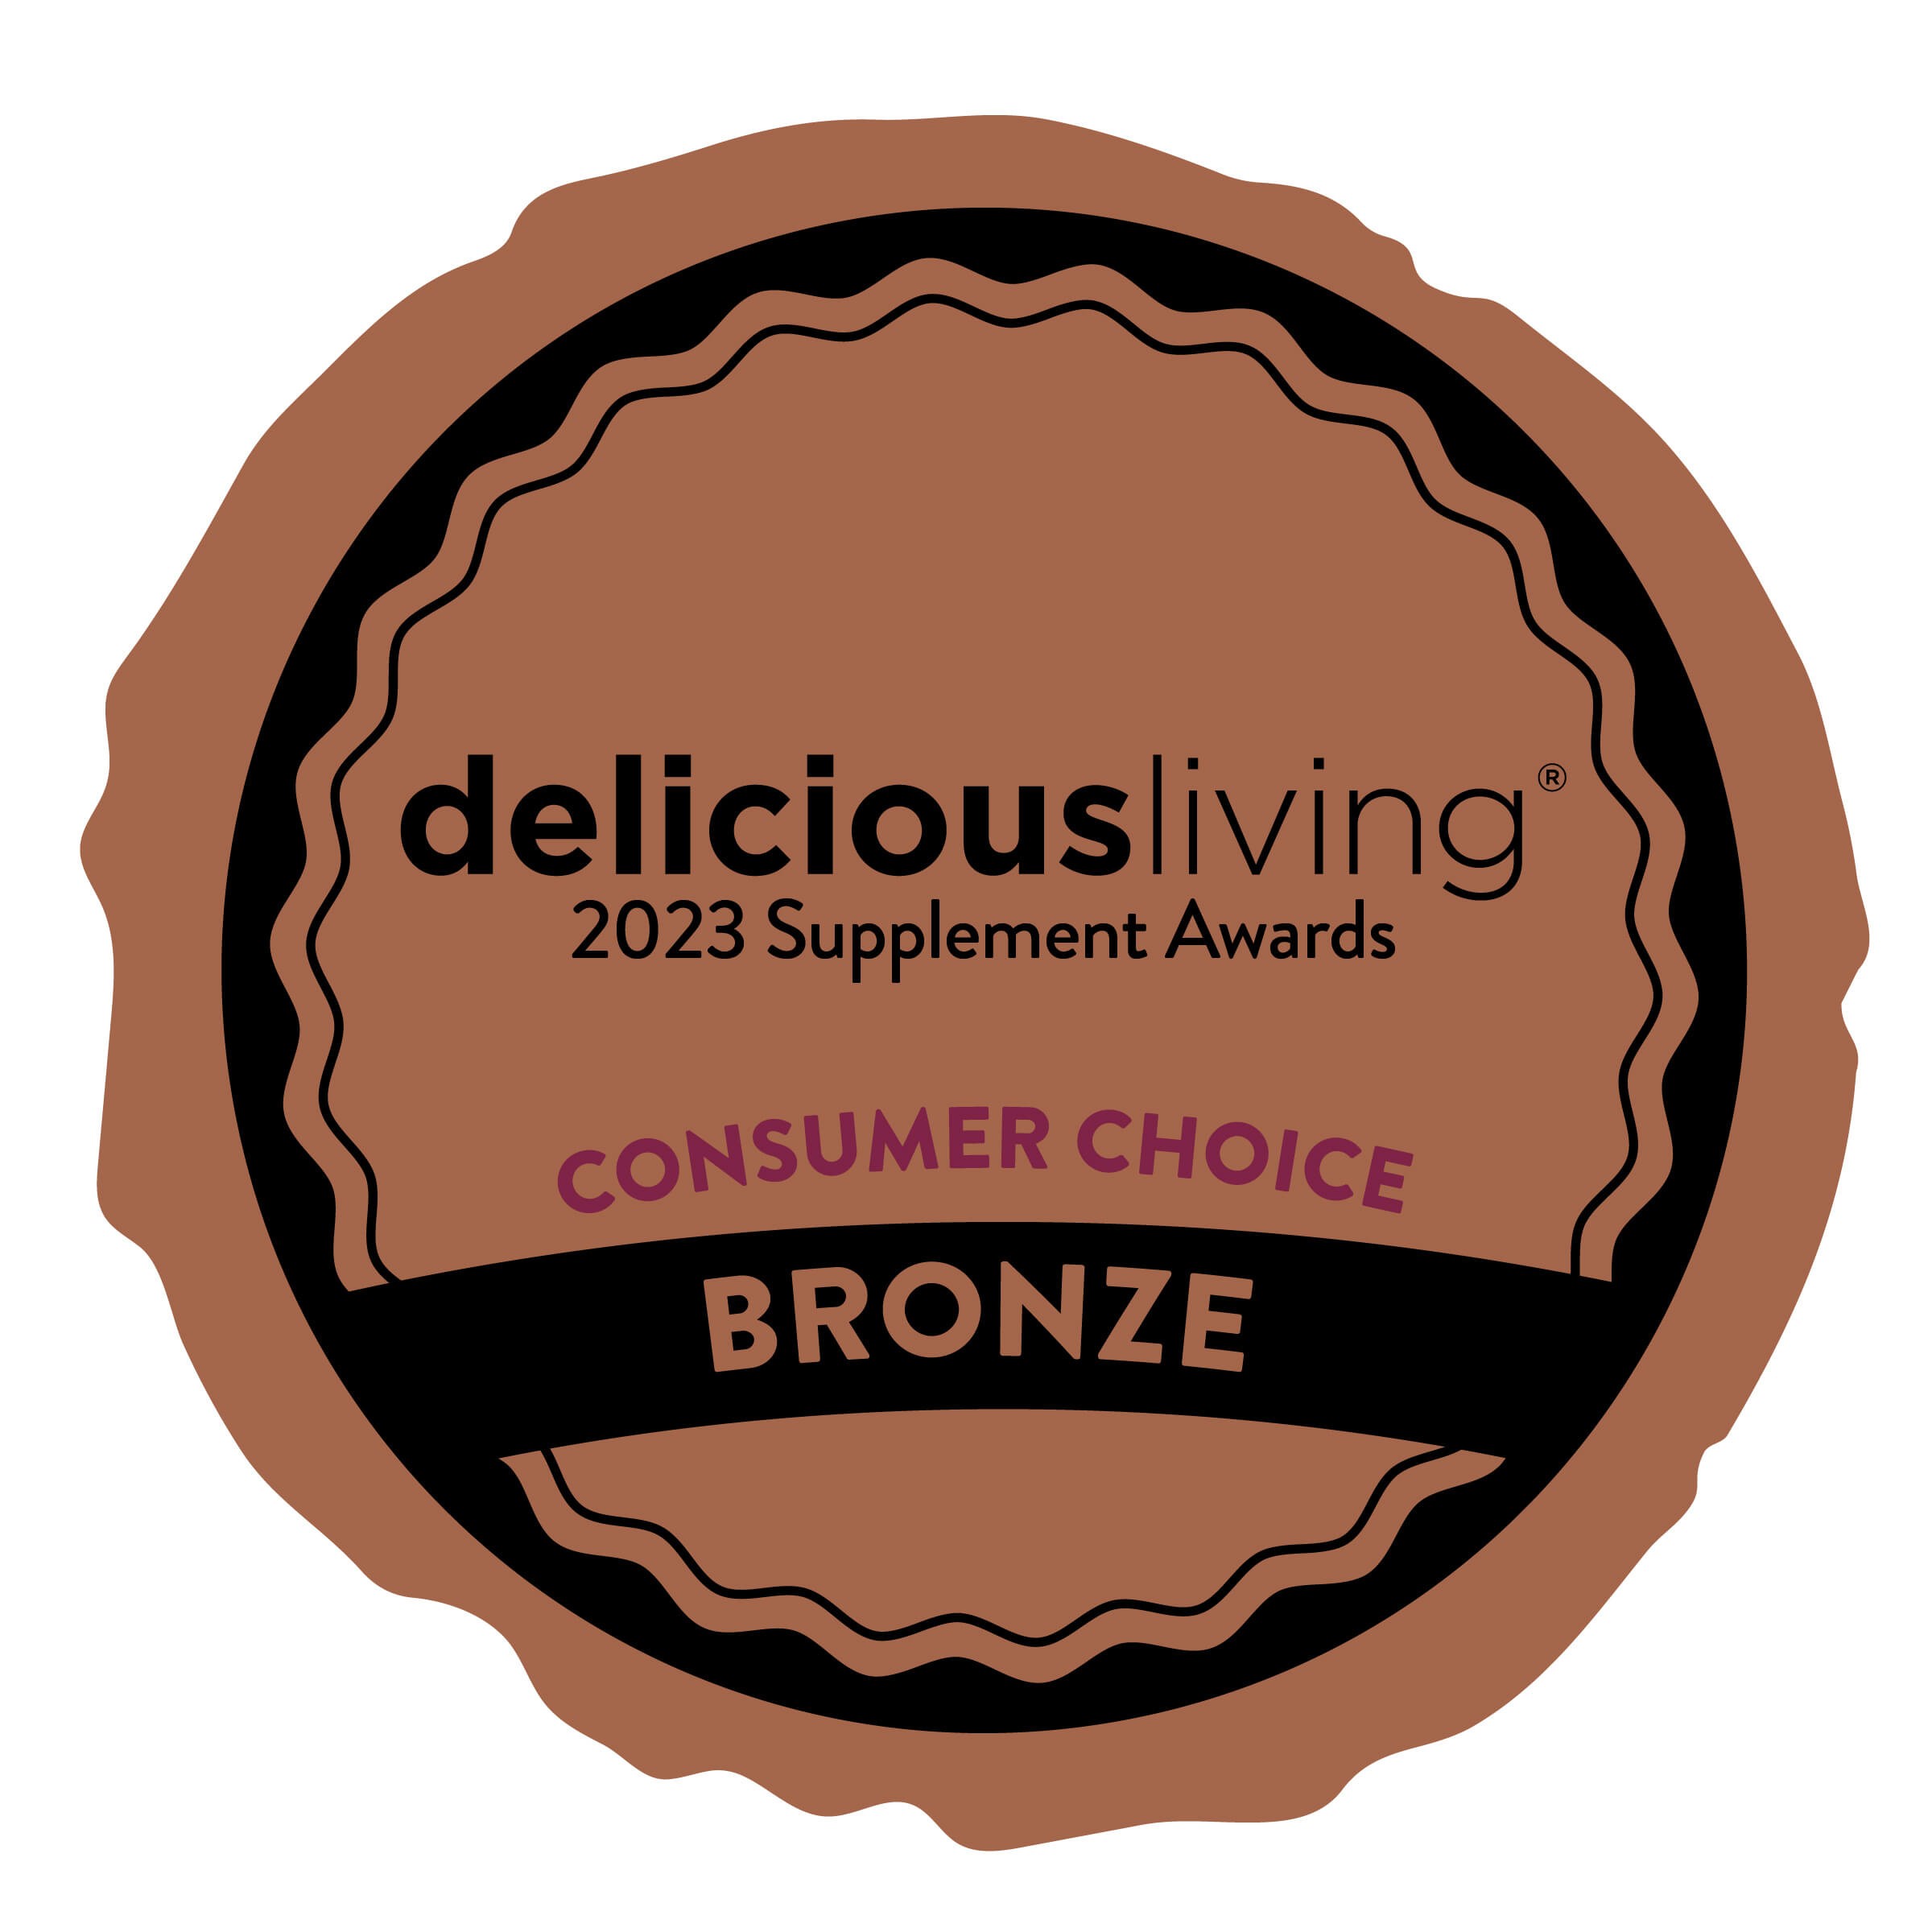 SaltWrap wins BRONZE at Delicious Living Supplement Awards